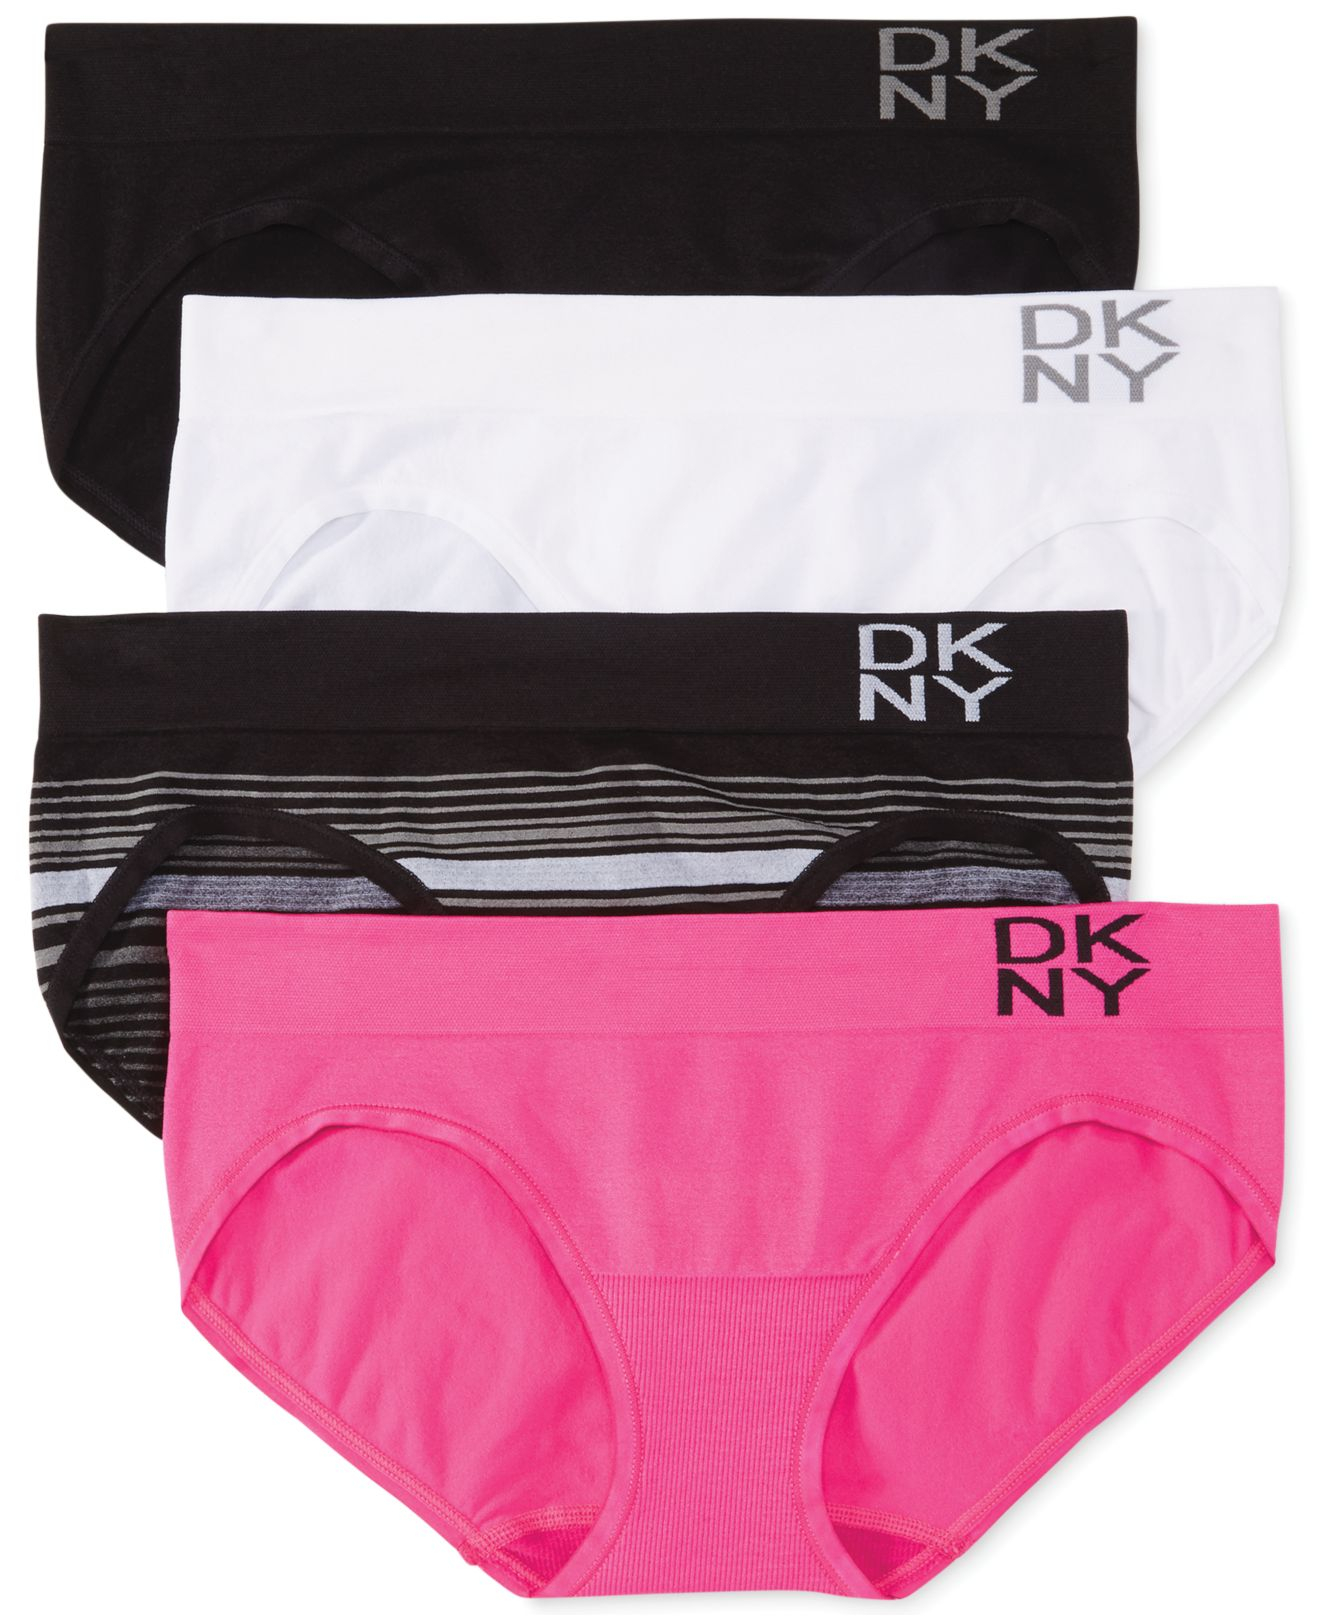 DKNY Energy Seamless Bikini Panty 570046 S, M, L MSRP $12.00 NWT